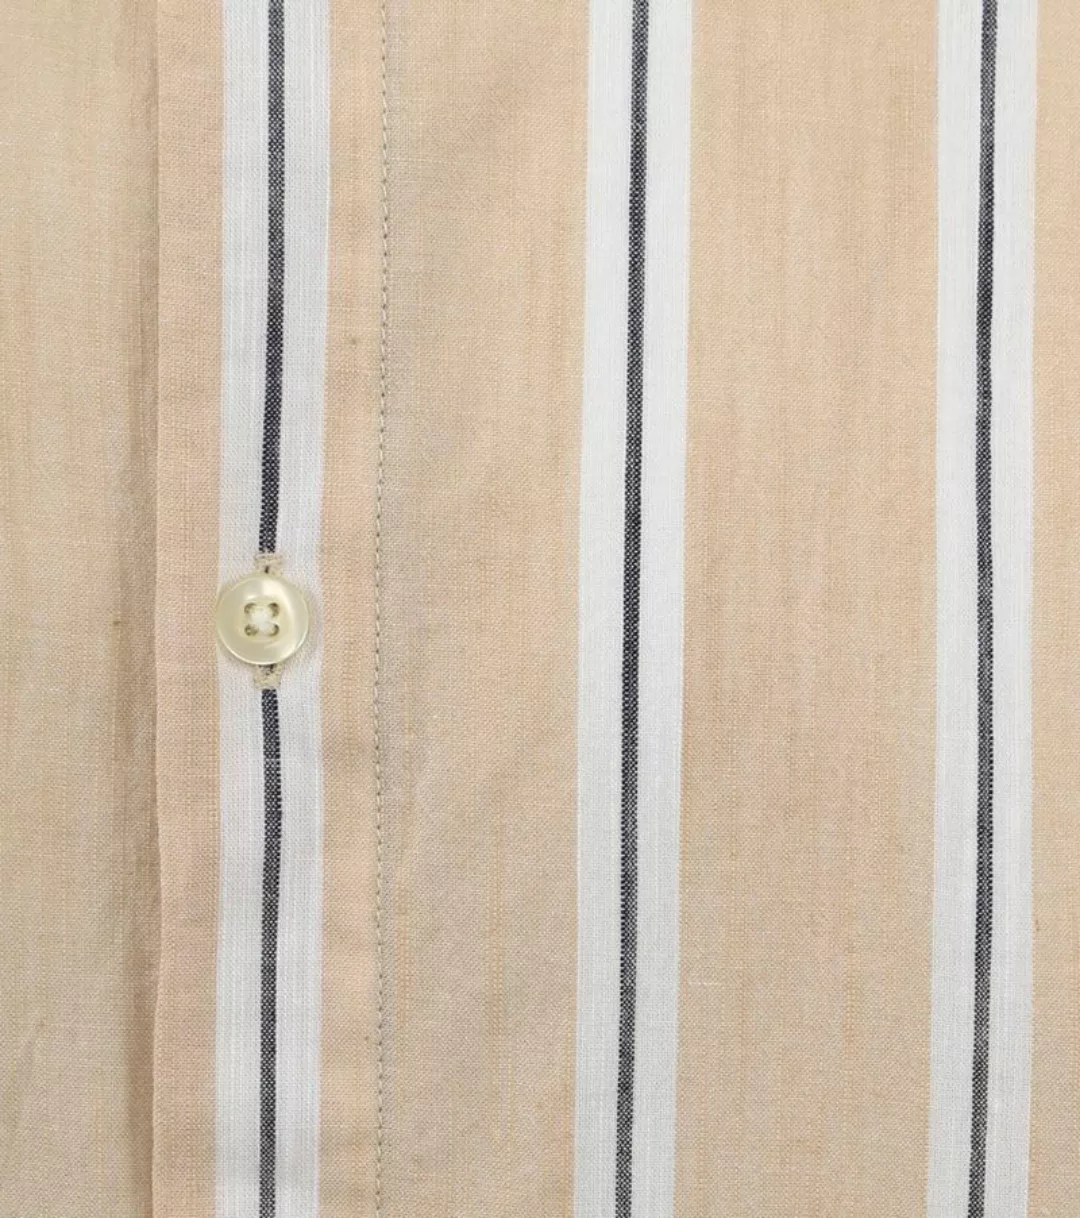 KnowledgeCotton Apparel Kurzarmhemd Relaxed Fit Striped Short Sleeved Cotto günstig online kaufen